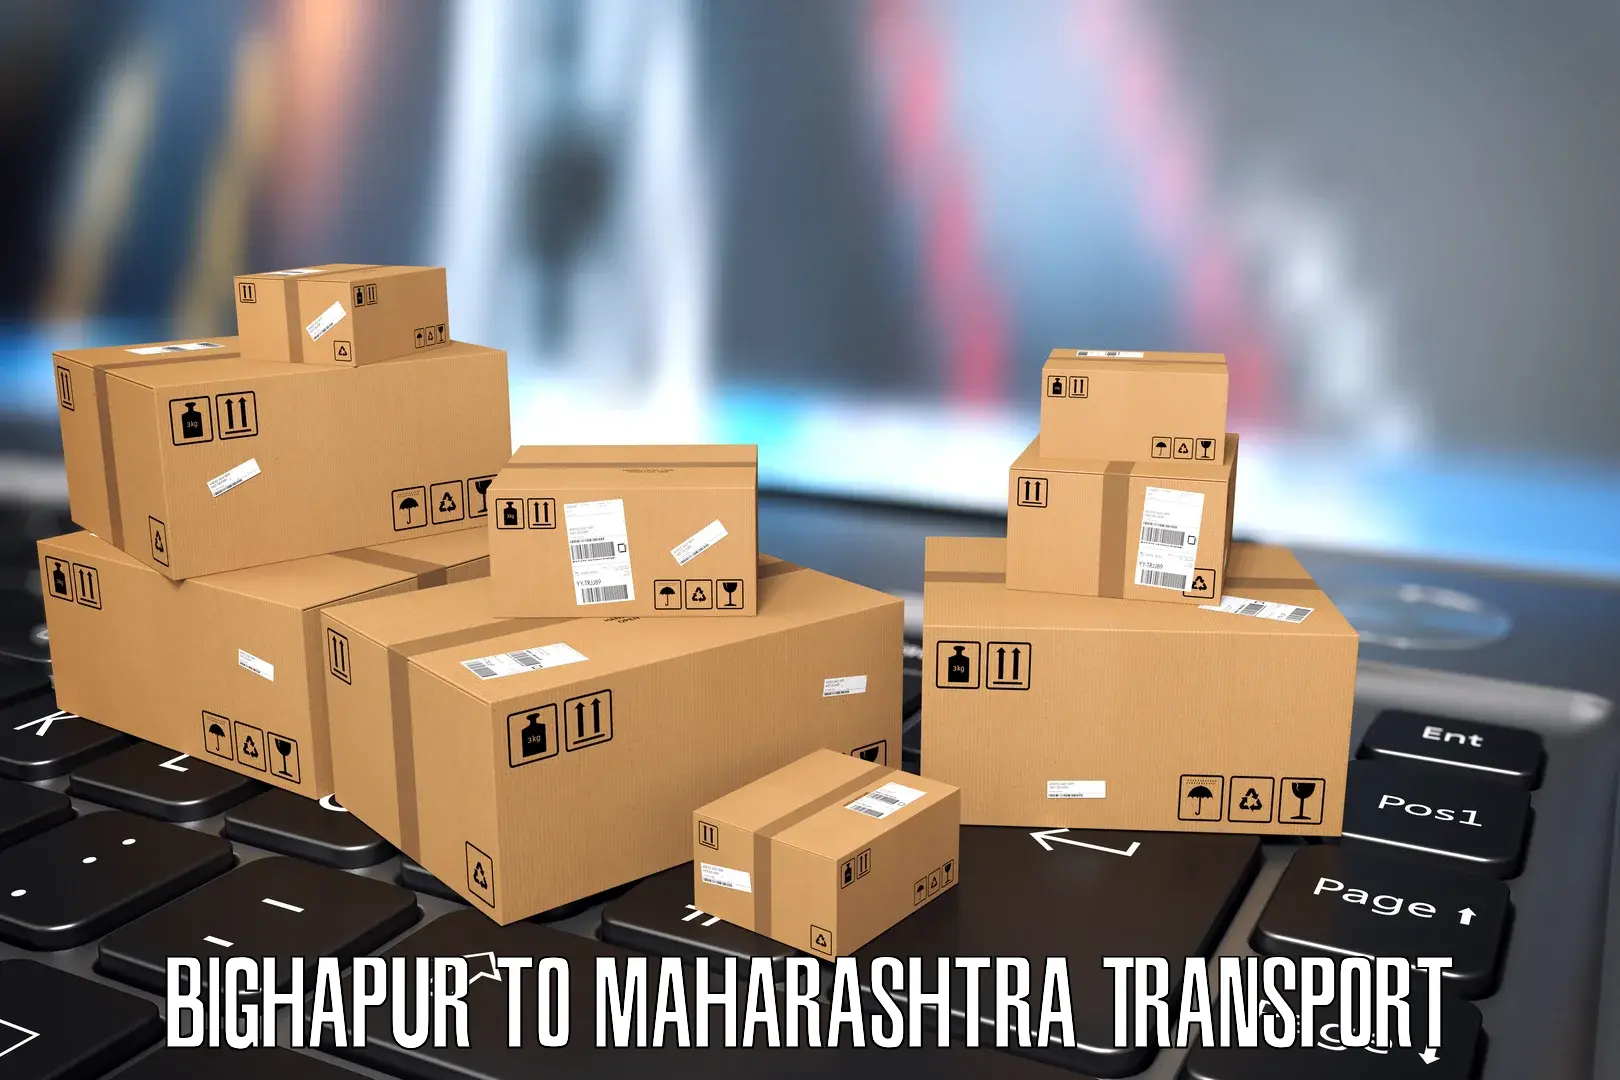 Delivery service Bighapur to Ojhar